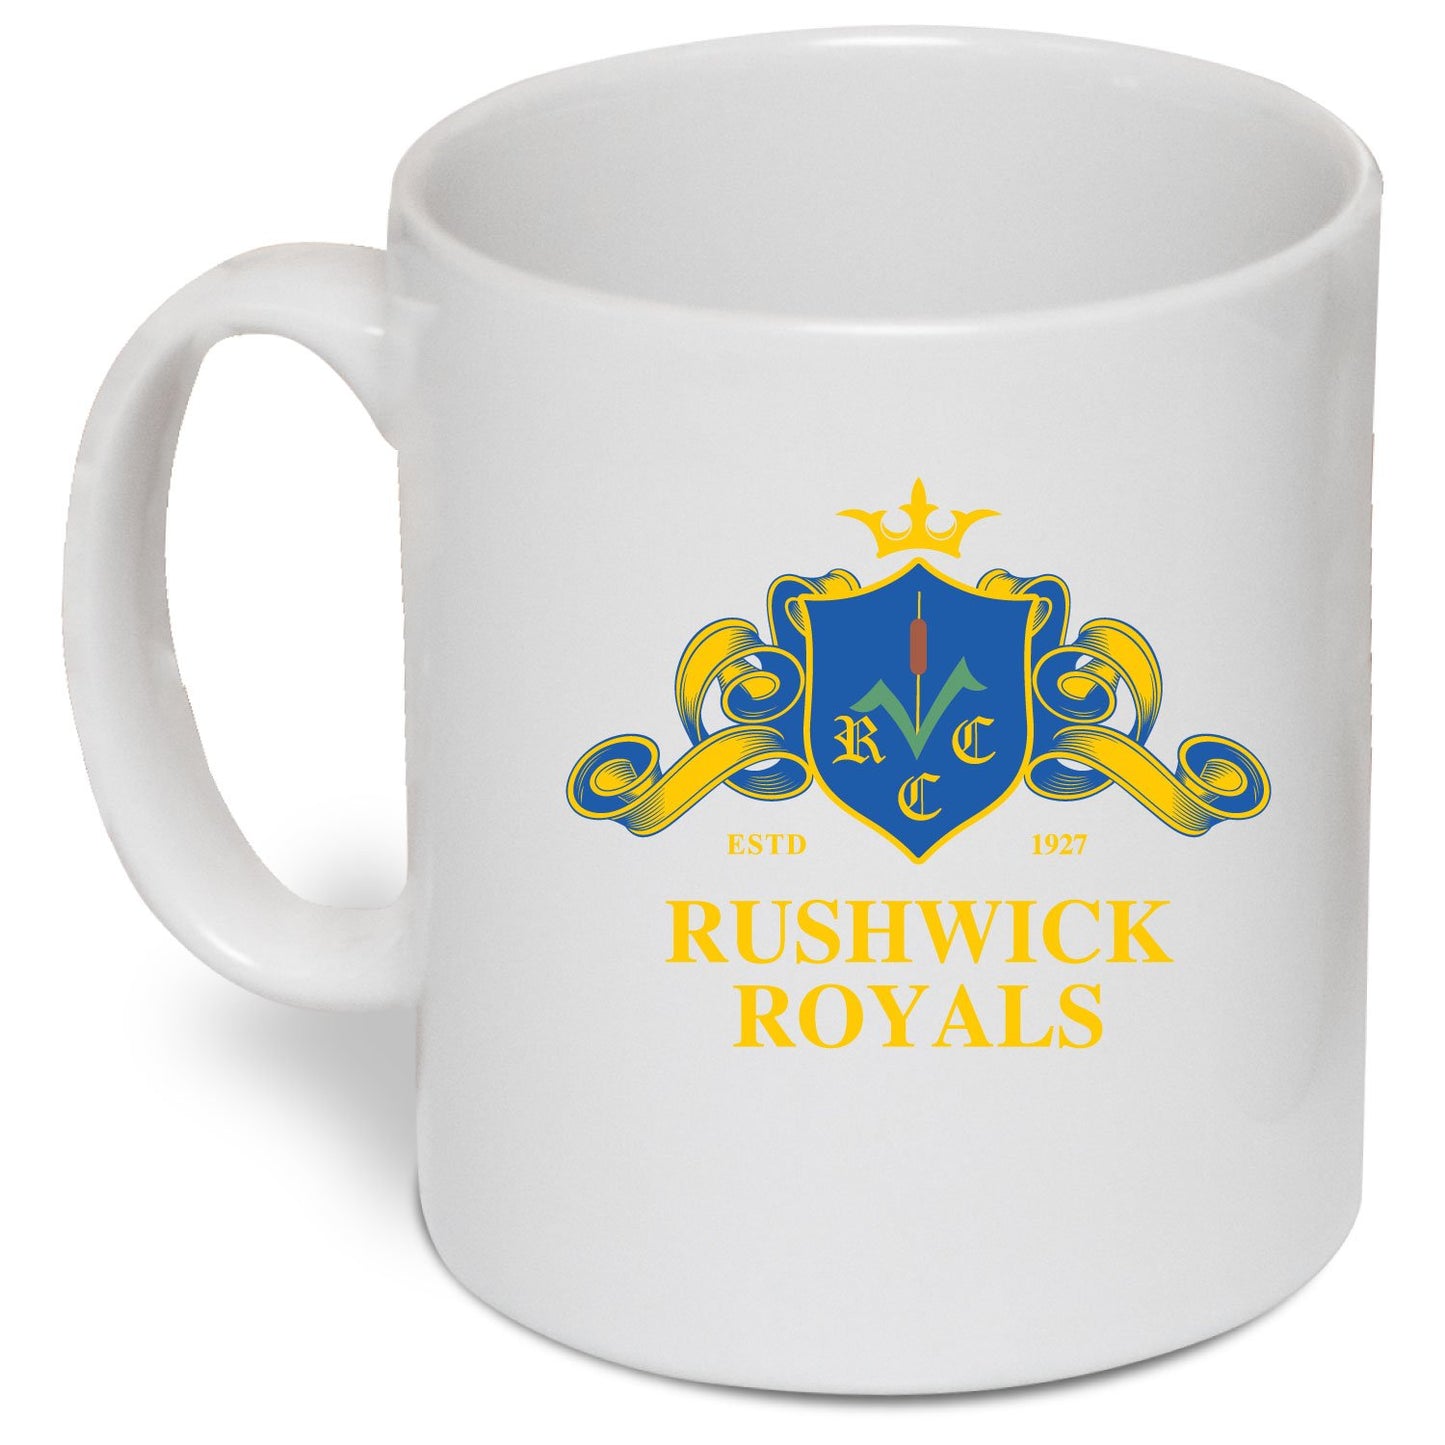 rushwick royals mug front